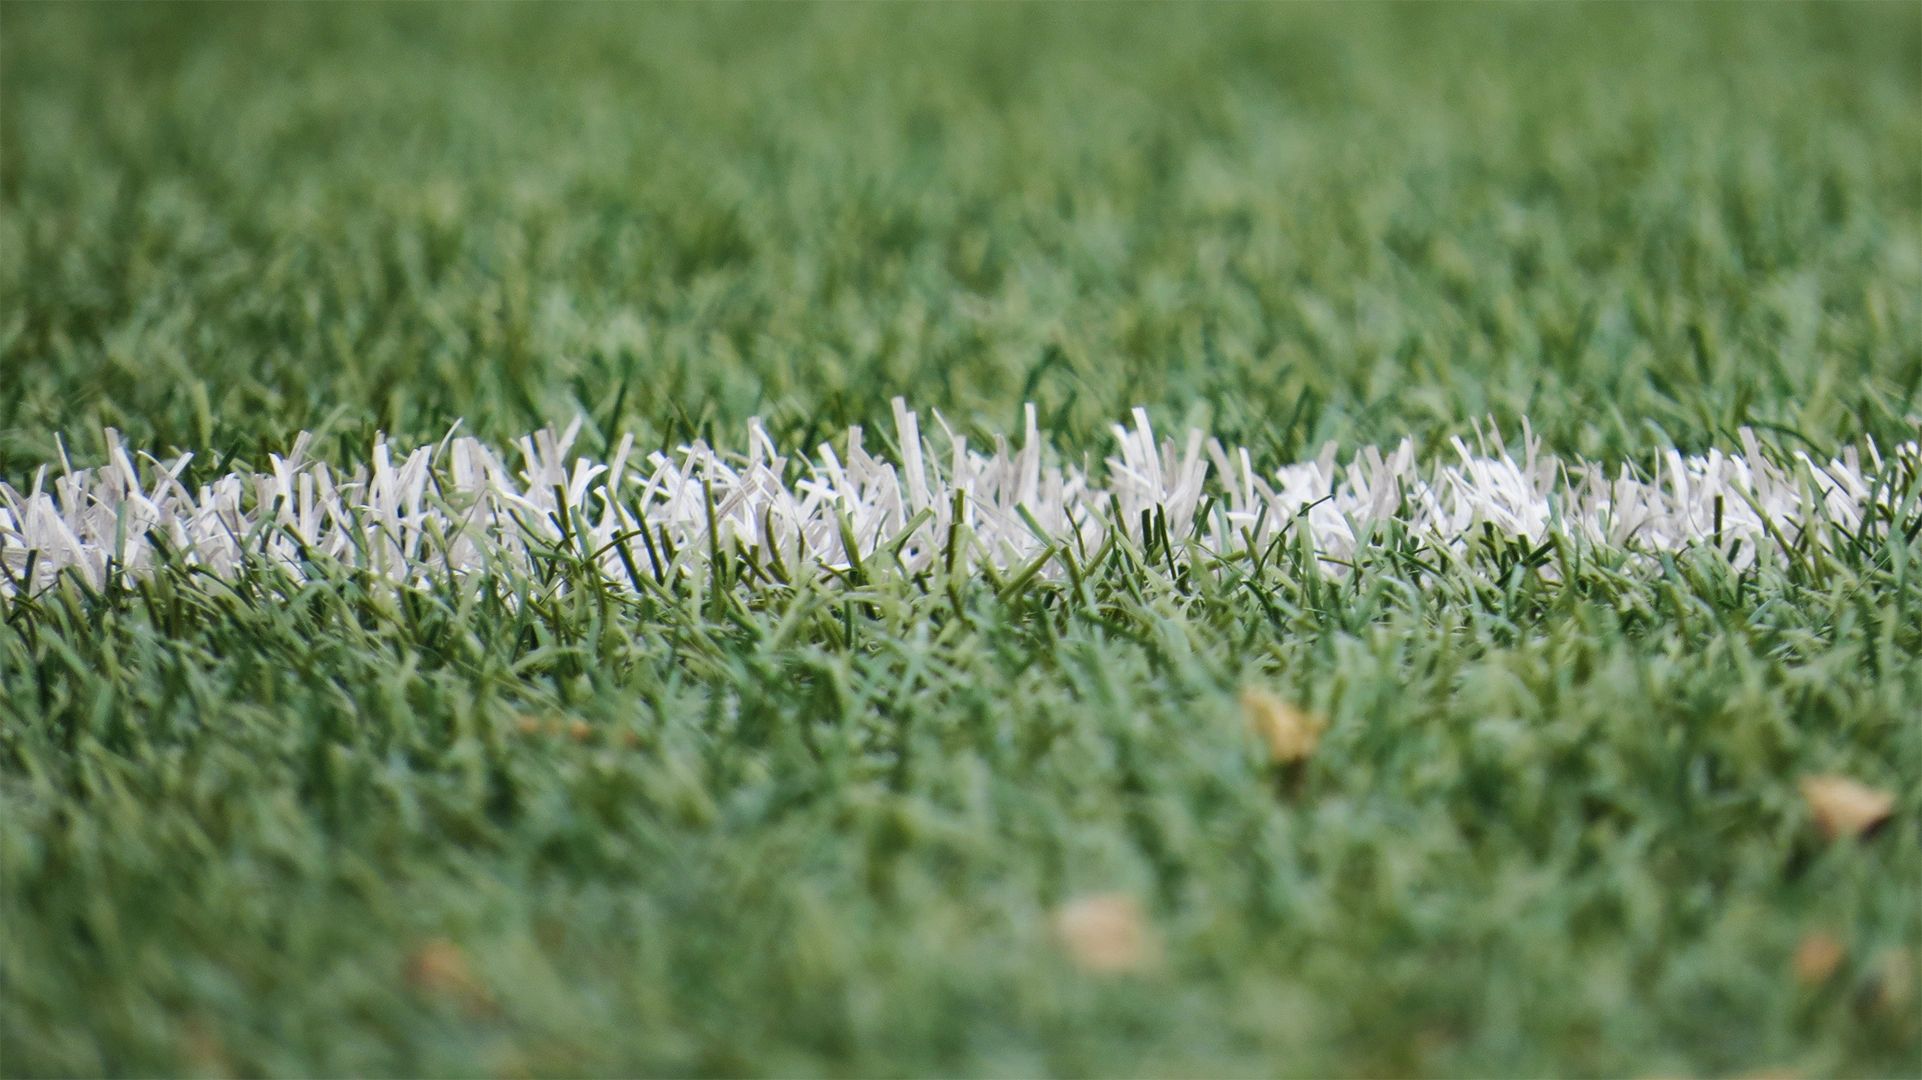 White sideline of a soccer field.